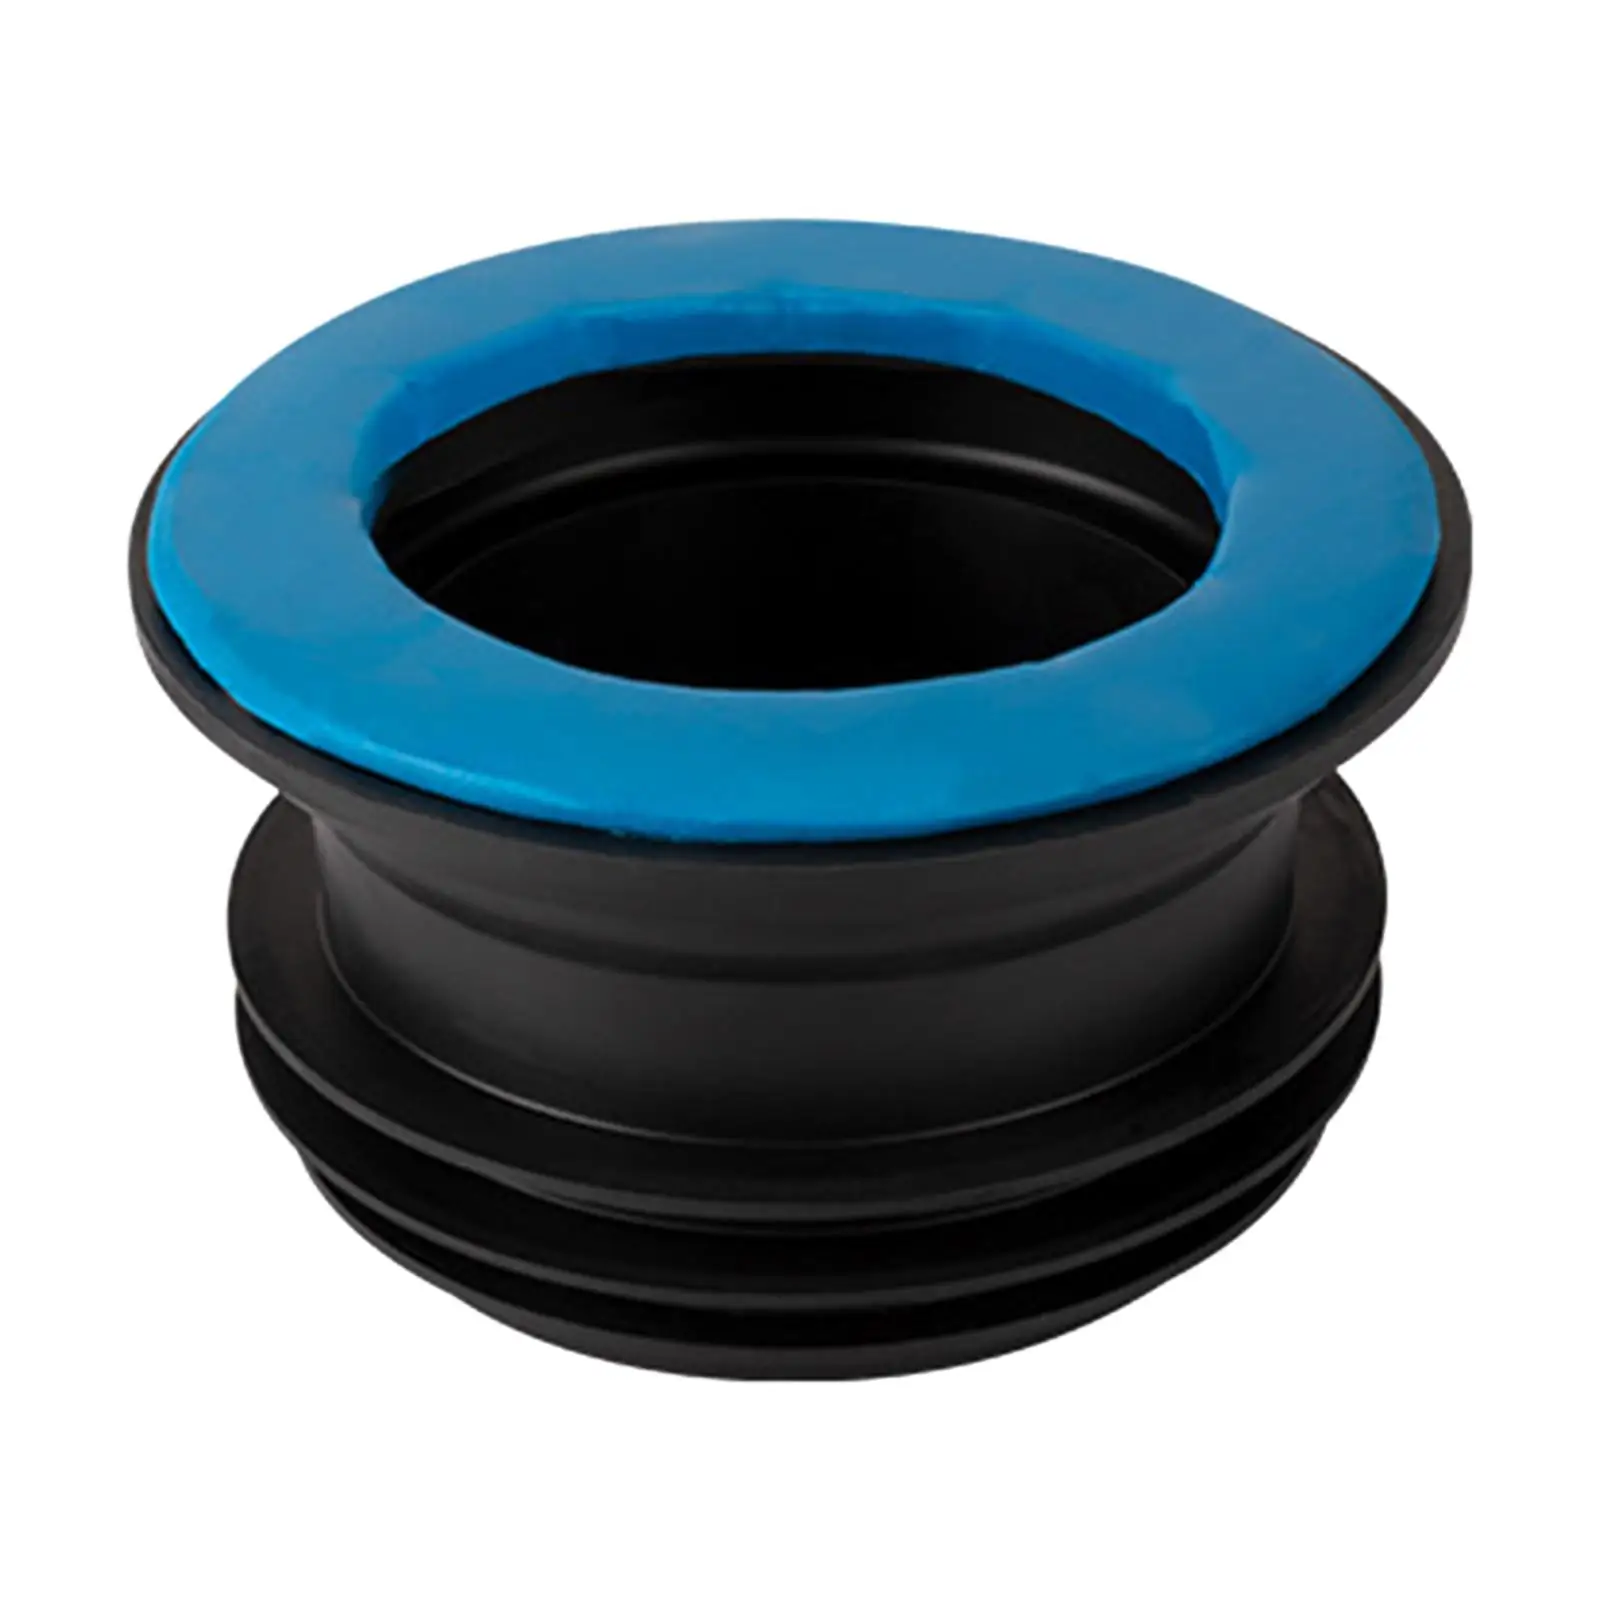 Toilet Rubber Ring, Toilet Wax Ring, Toilet Repair Kit Rubber Seal Drain Pipe Sealing Ring